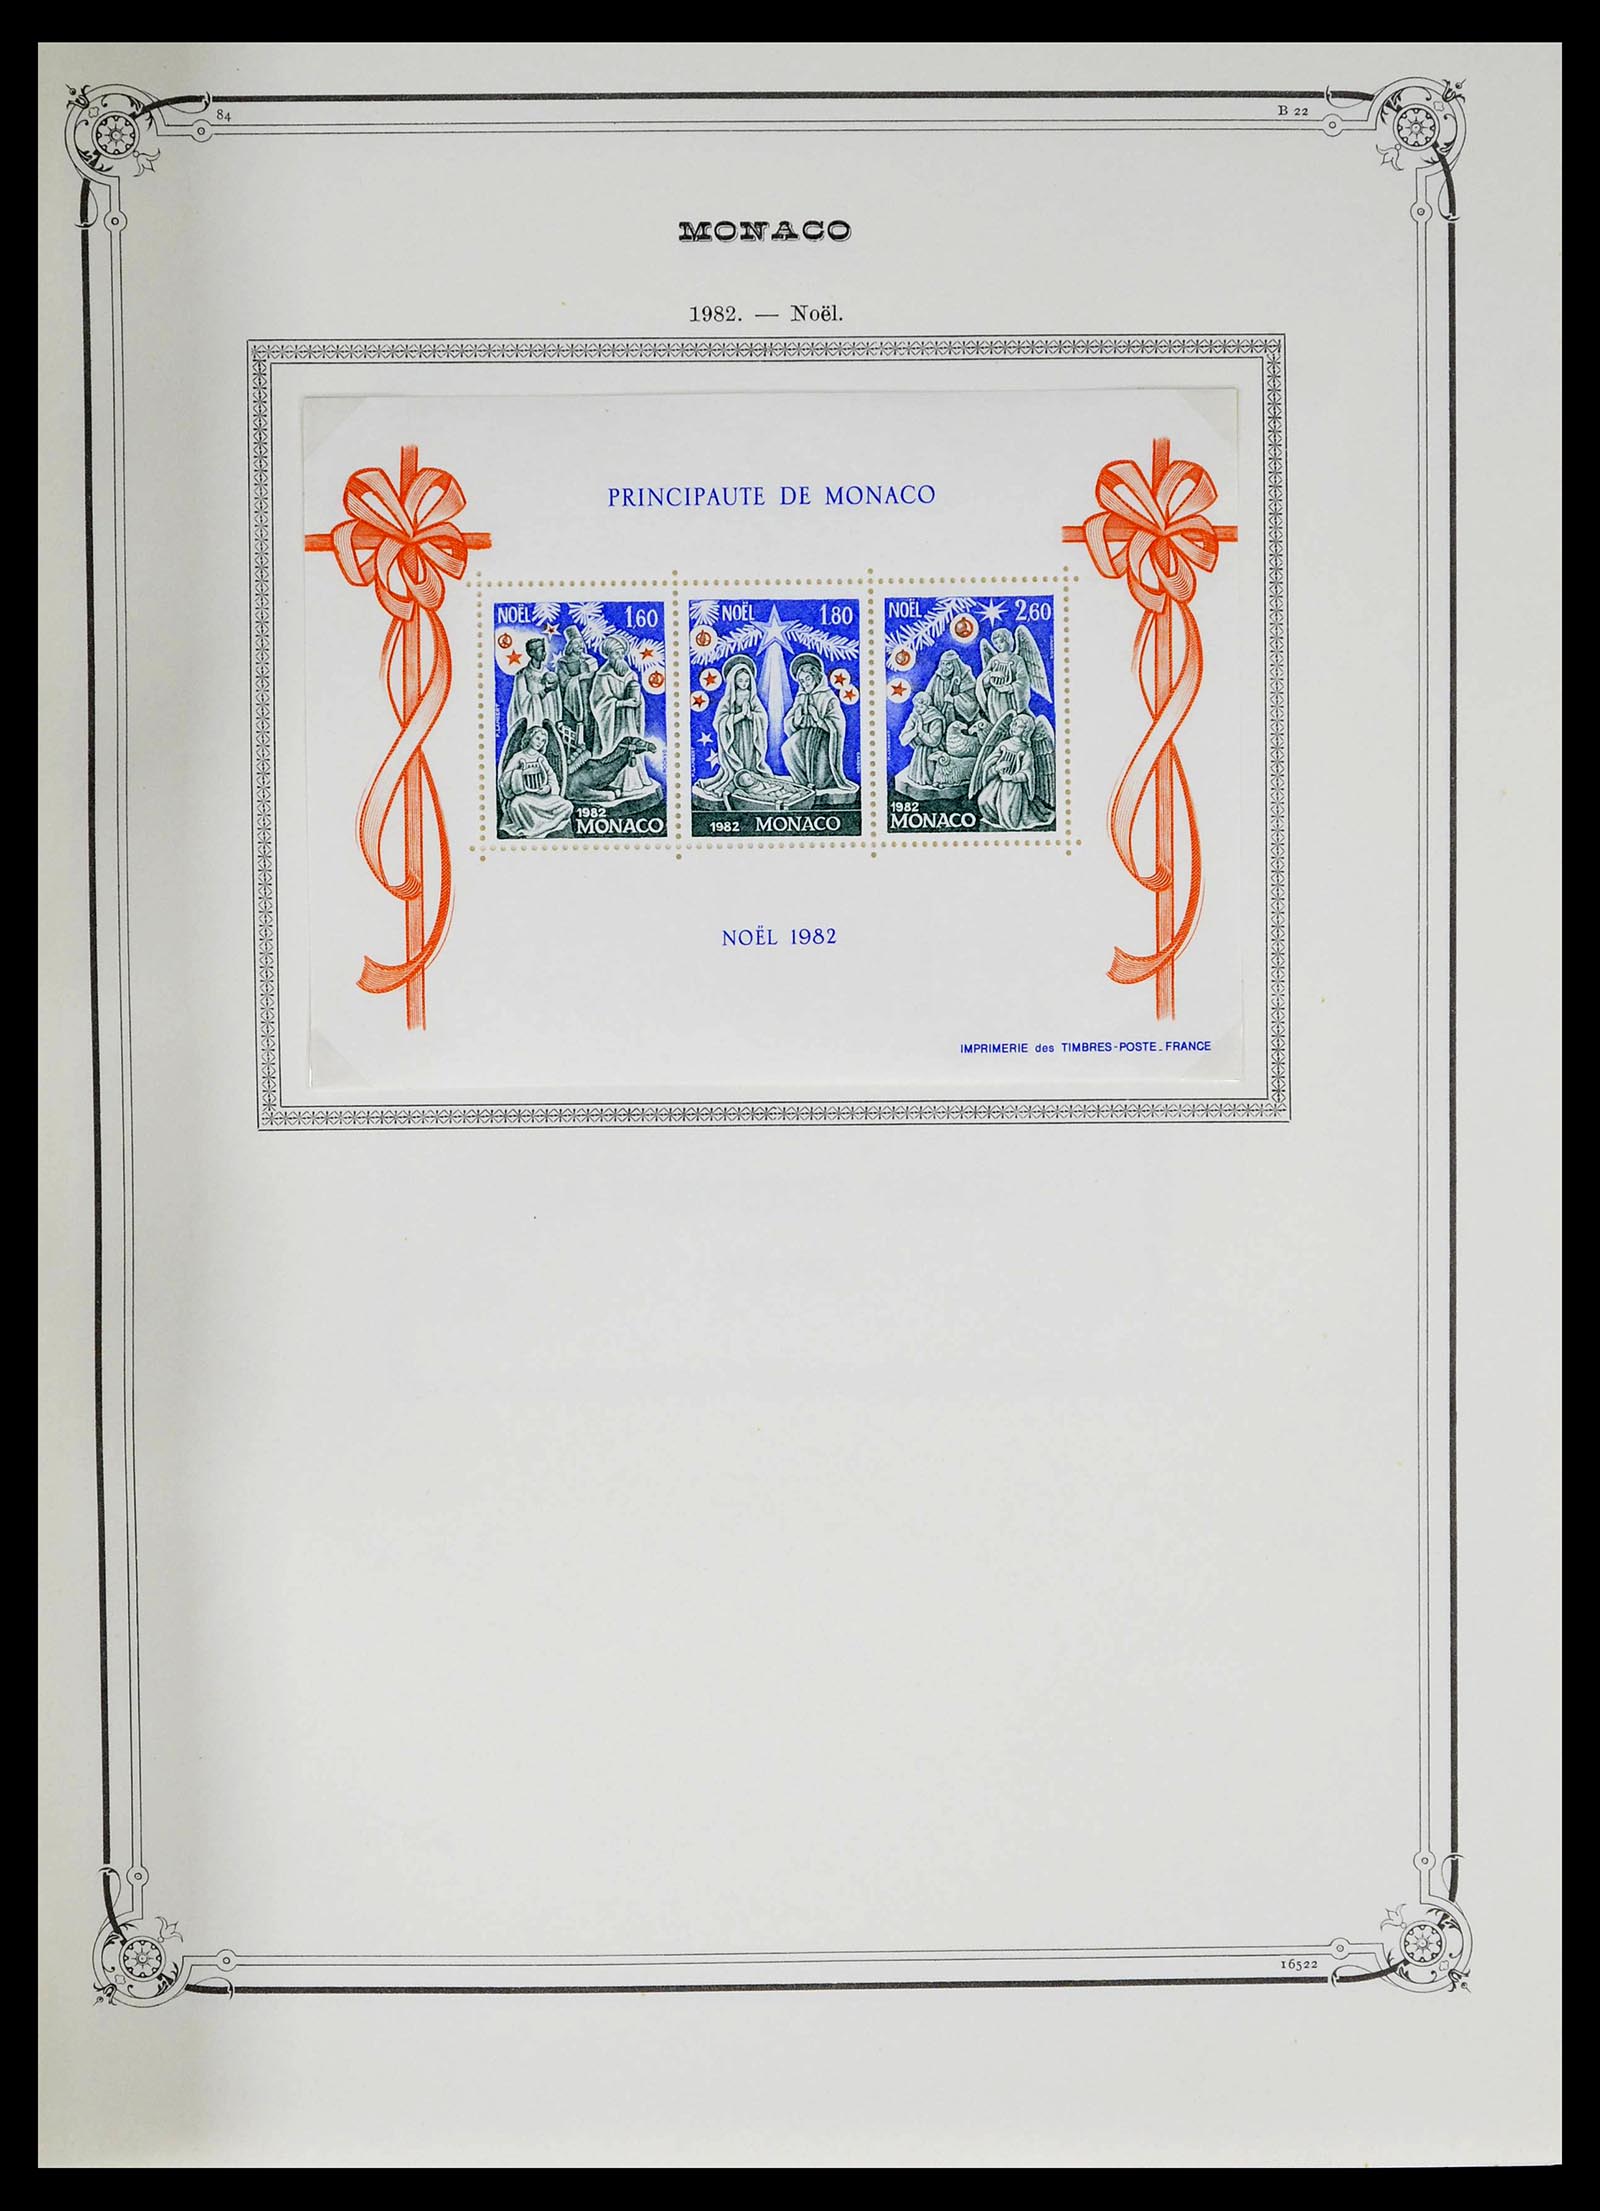 39133 0216 - Stamp collection 39133 Monaco 1885-1996.